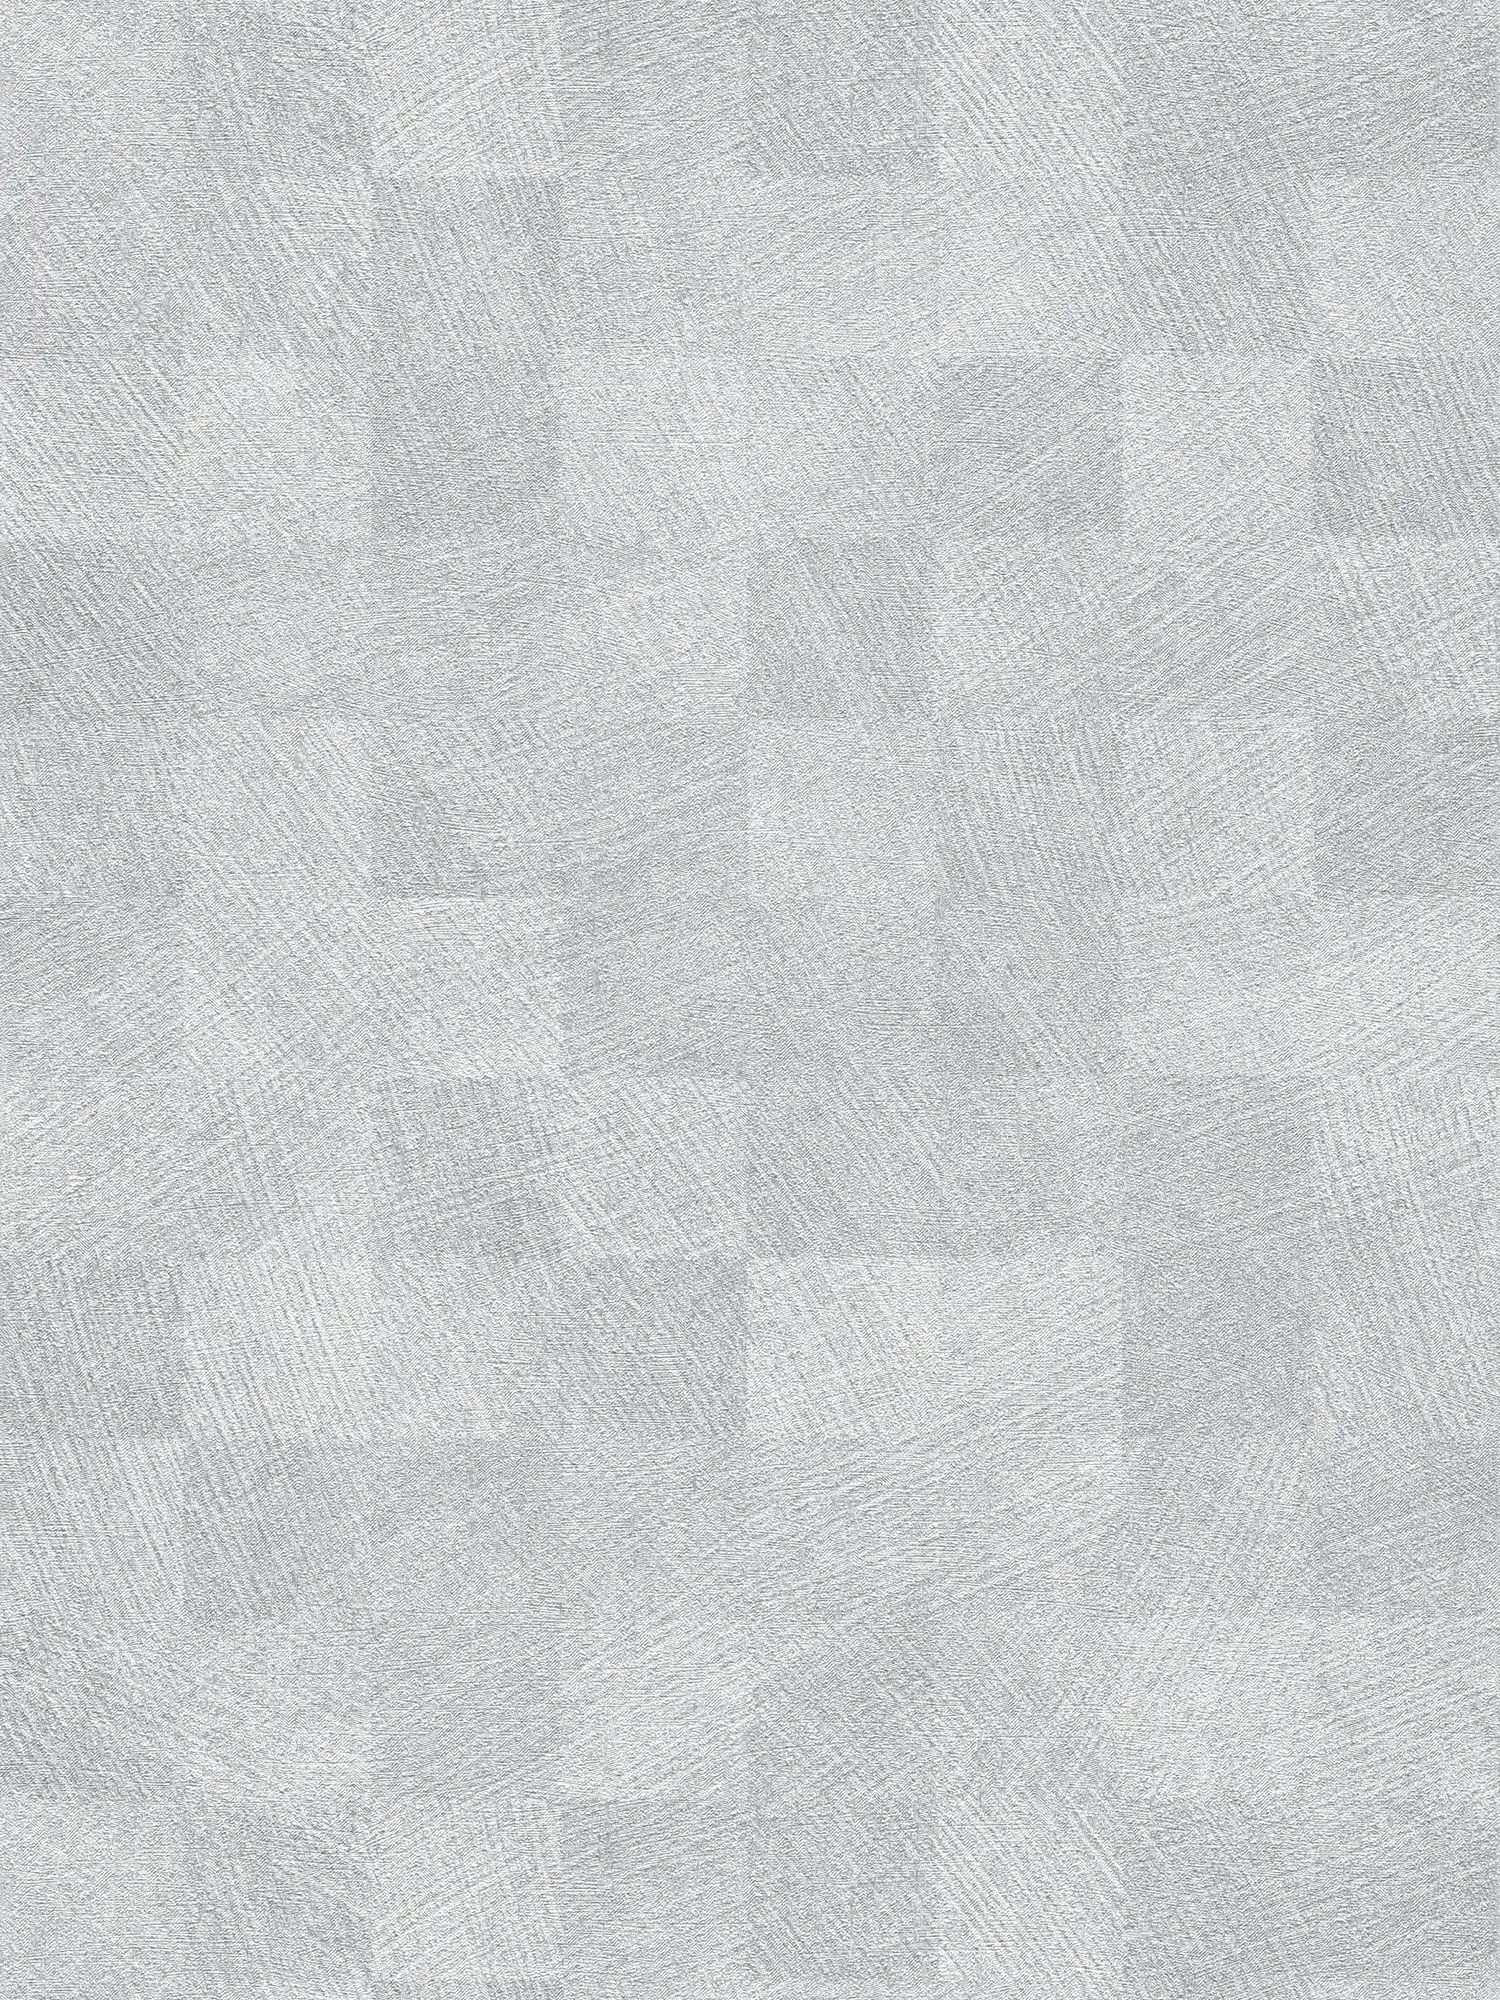         Metallic wallpaper check pattern with gloss effect - grey
    